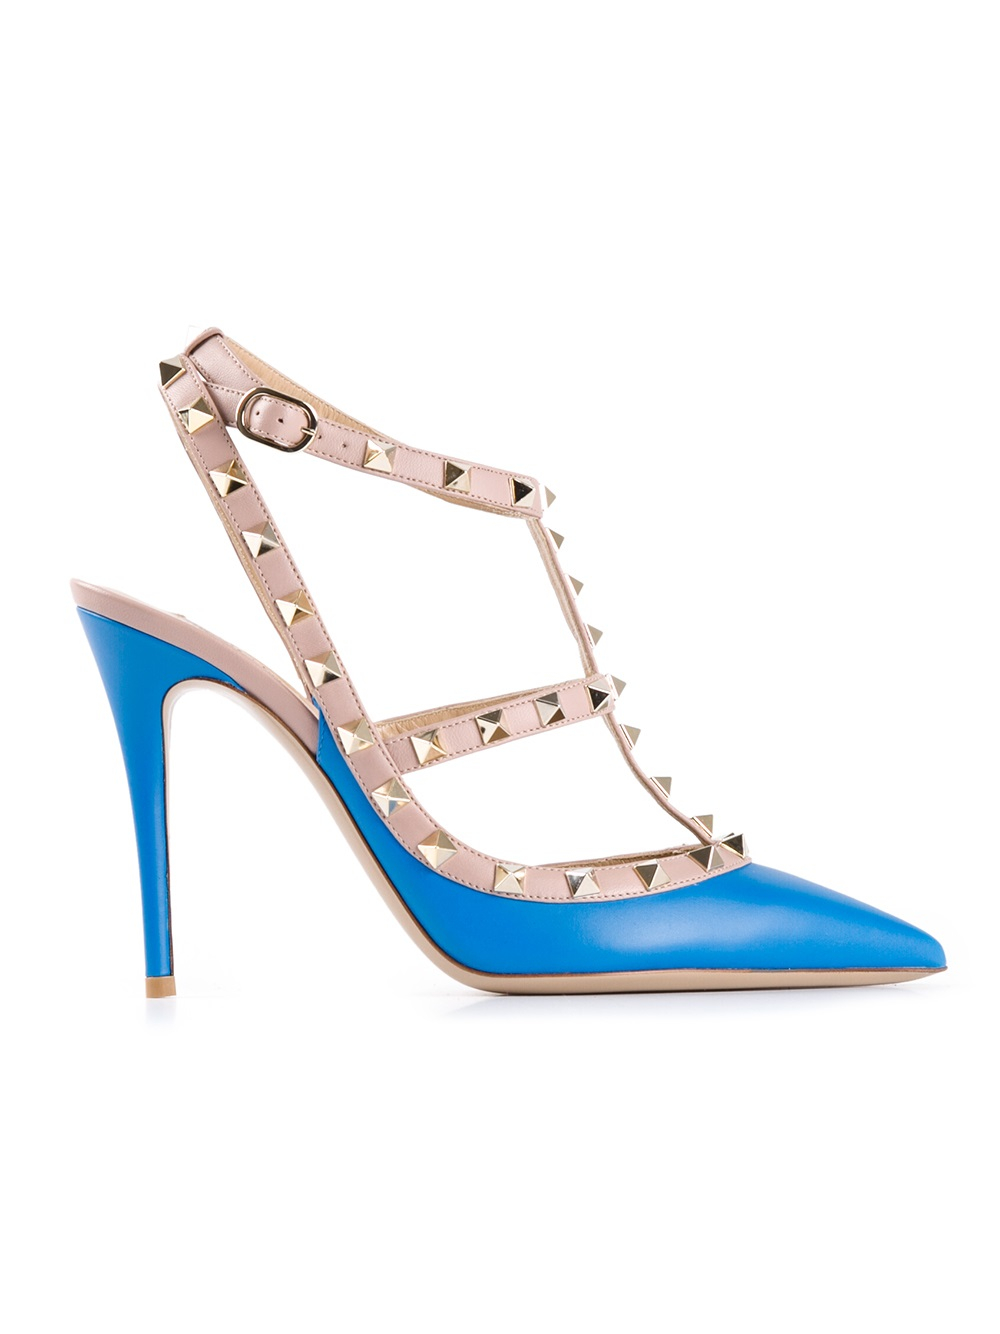 Valentino Rockstud Sandals in Blue | Lyst